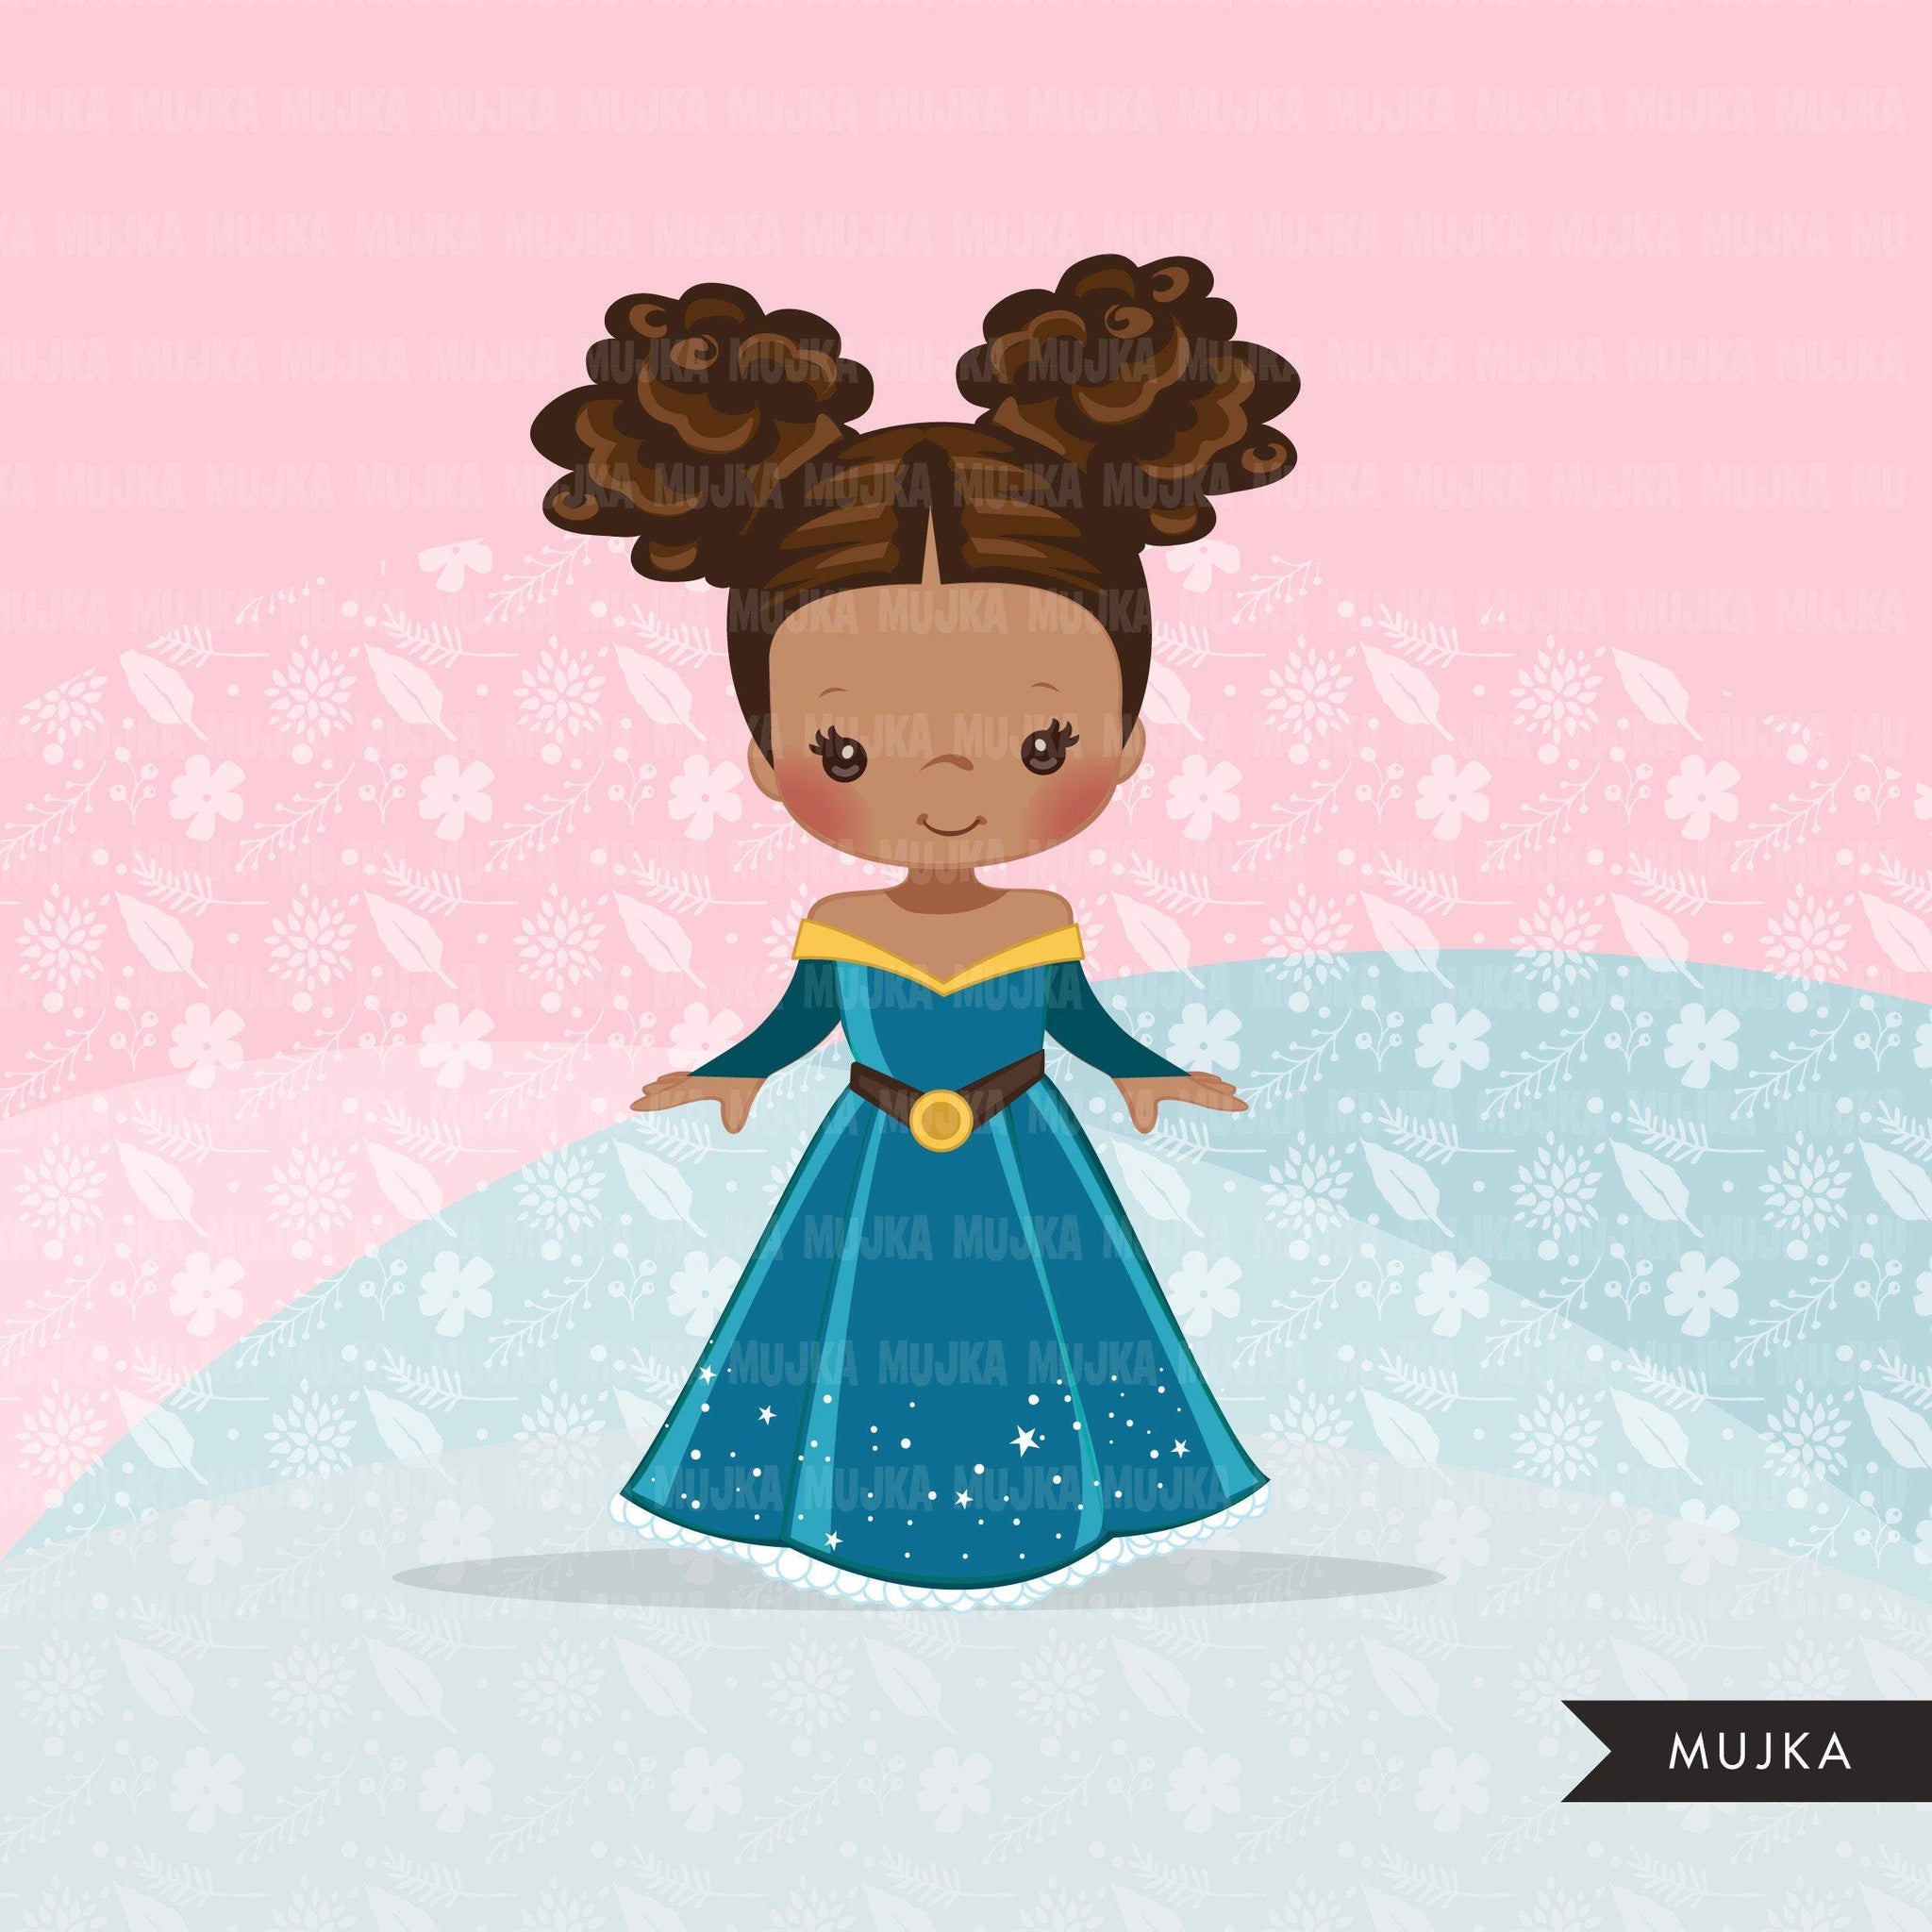 Black Princess clipart, fairy tale graphics, girls story book, dark blue princess dress, commercial use clip art